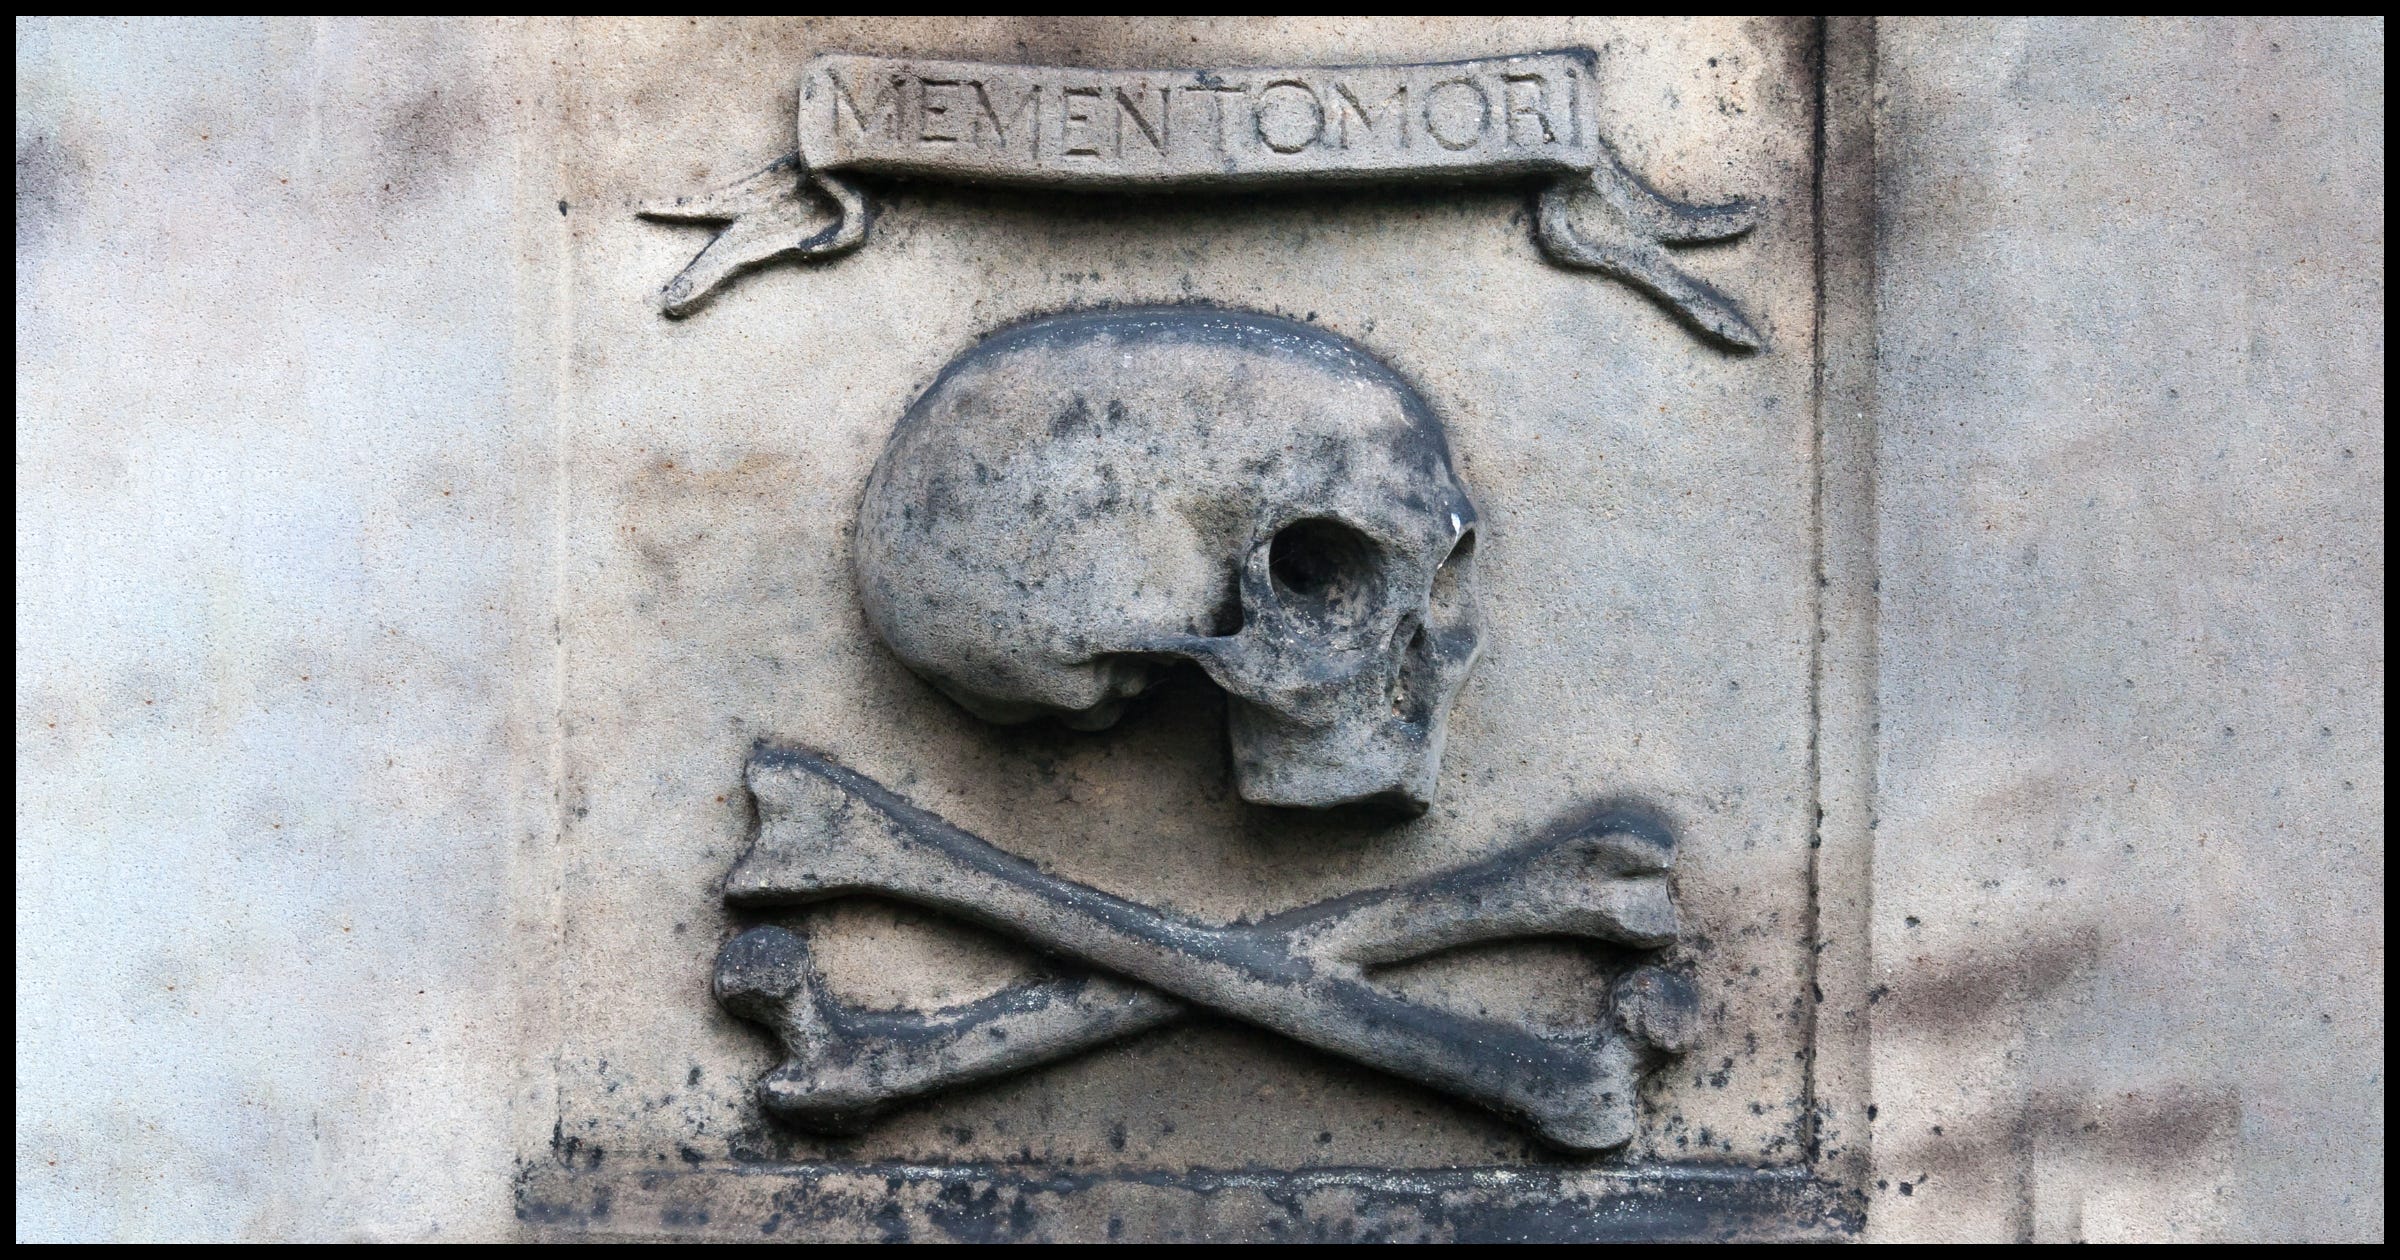 "Memento Mori" over a skull and crossed bones.